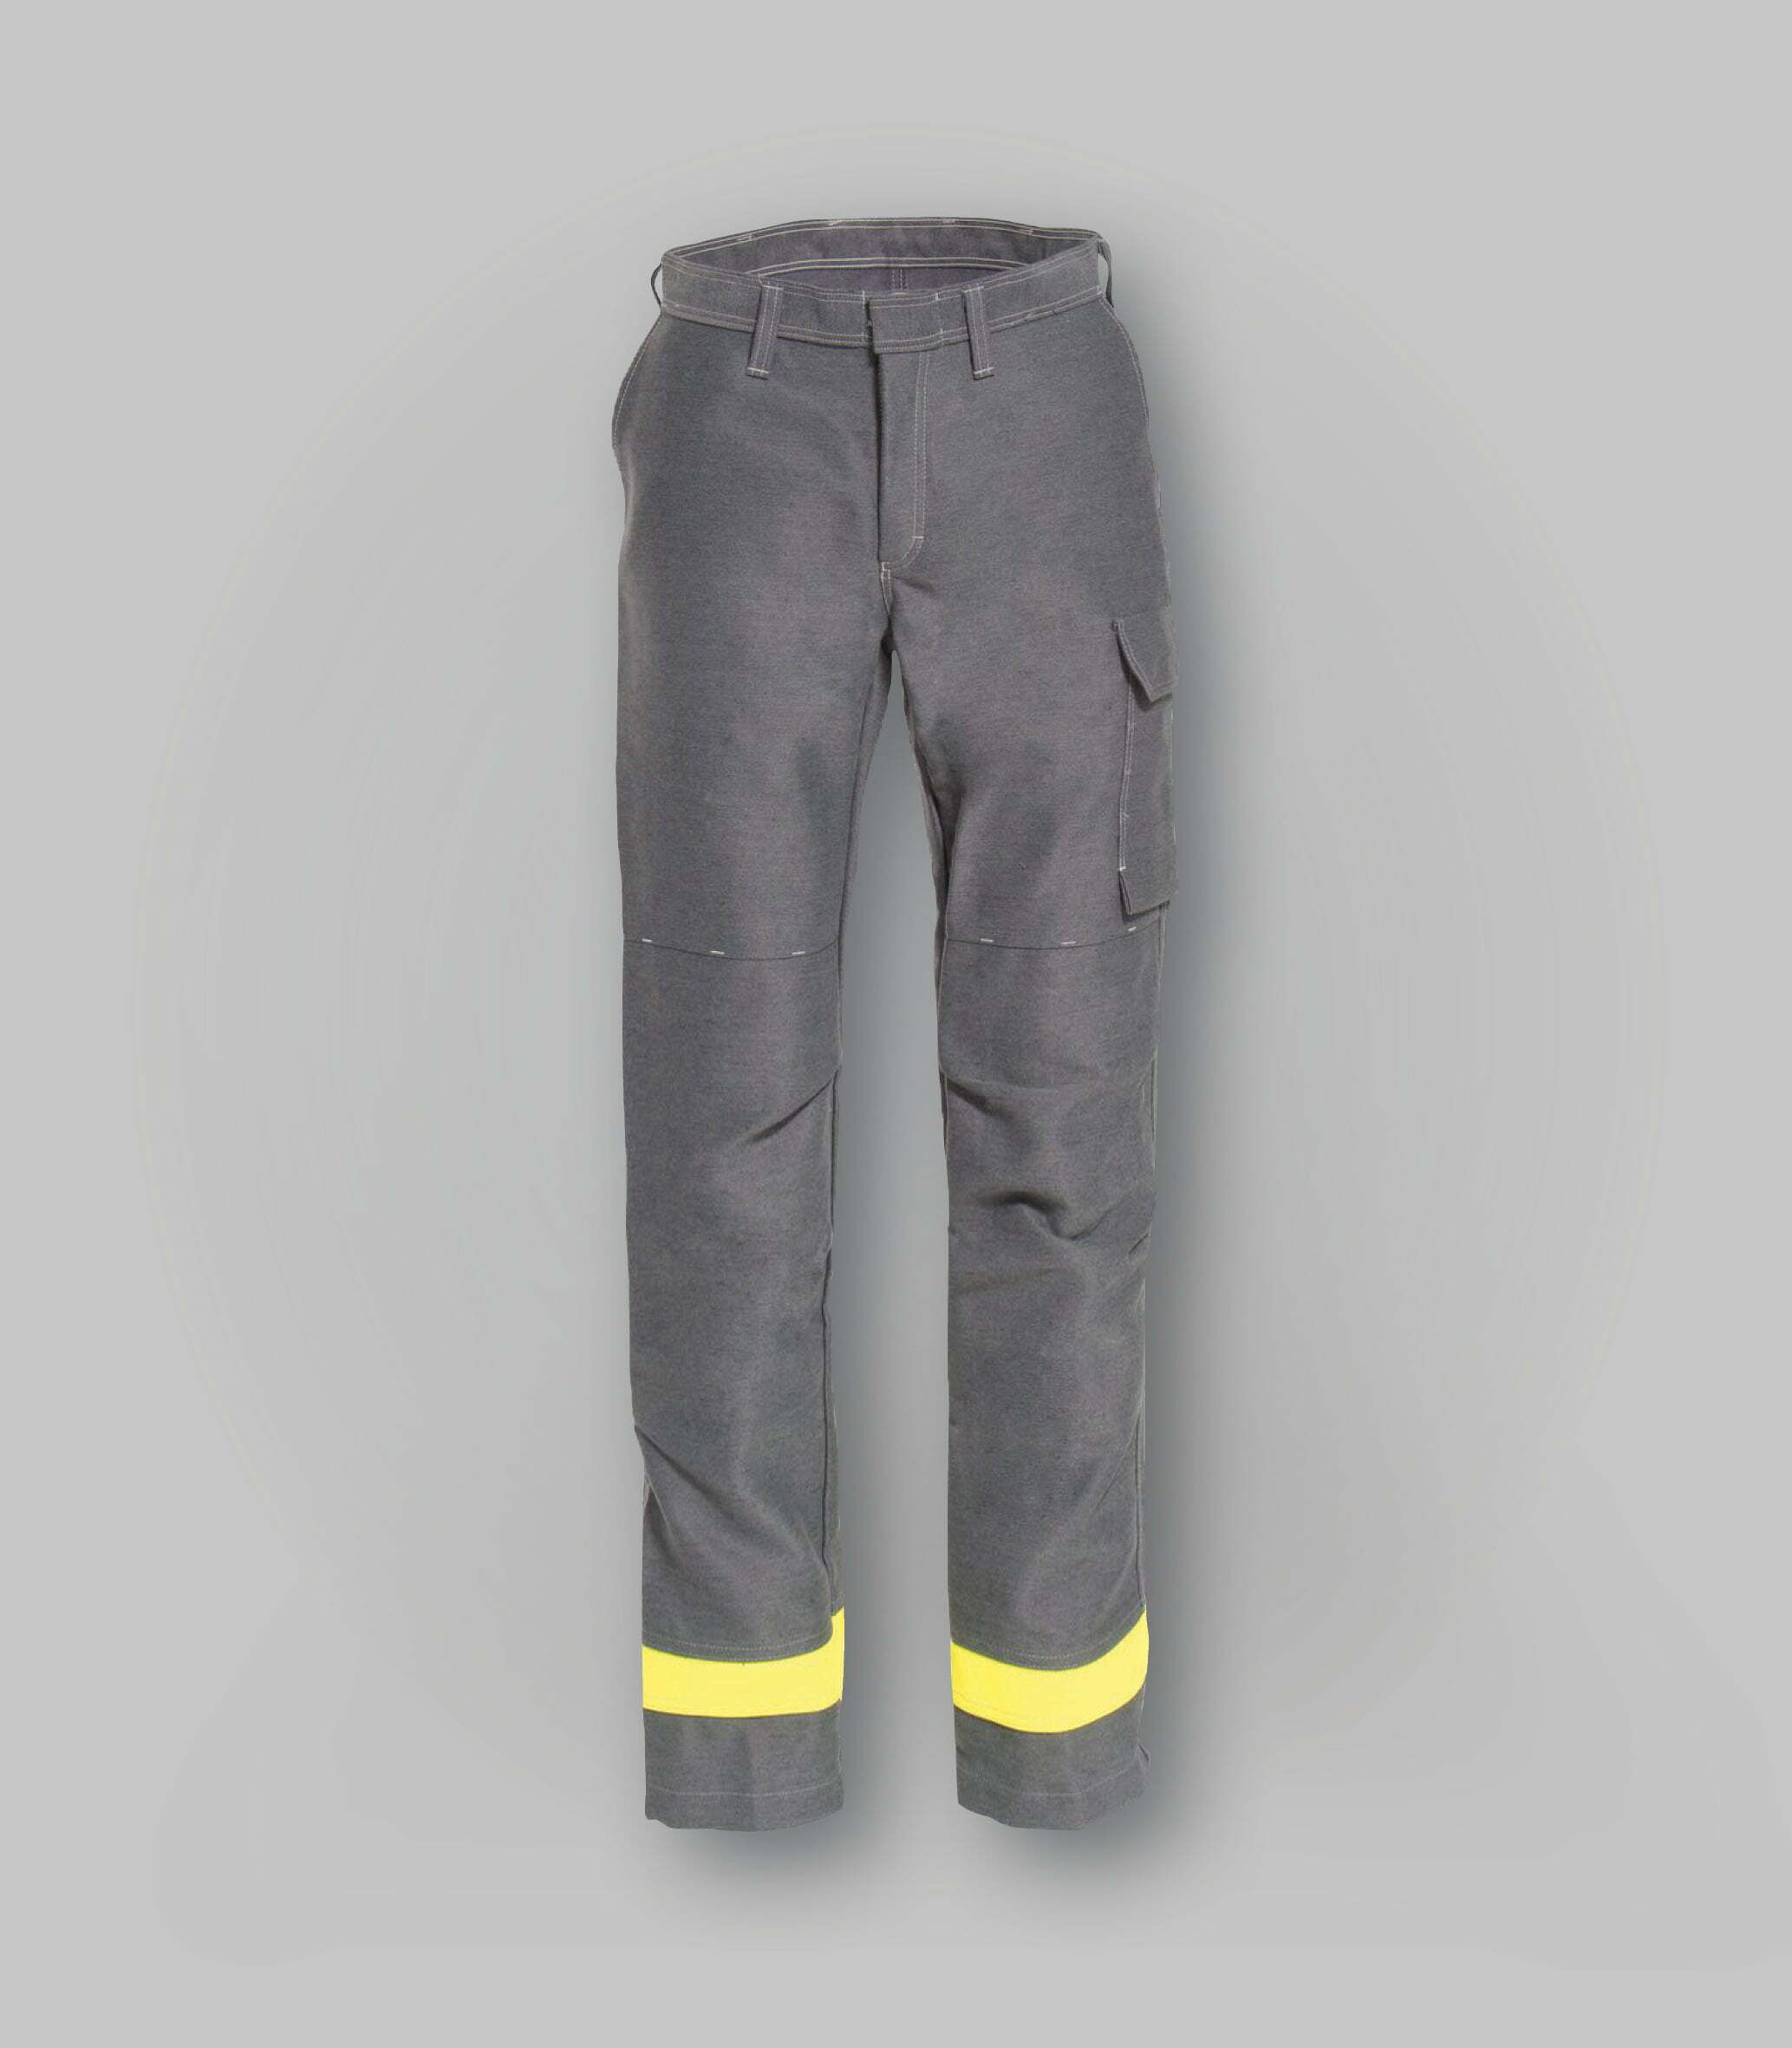 Pantaloni ignifughi per saldatura-abbigliamentocertificato.com